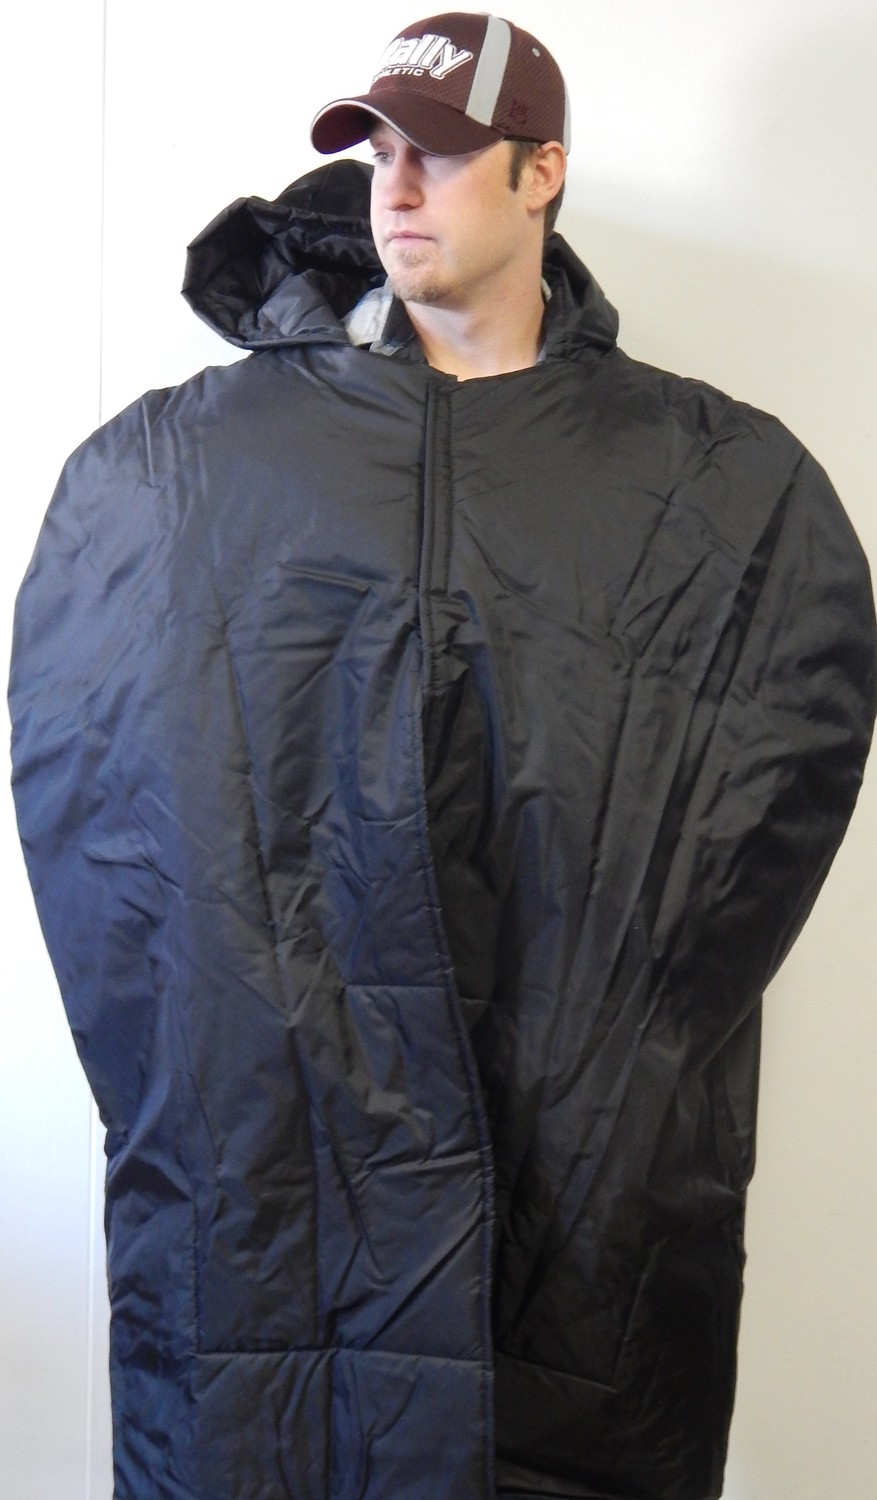 nfl sideline cape jacket